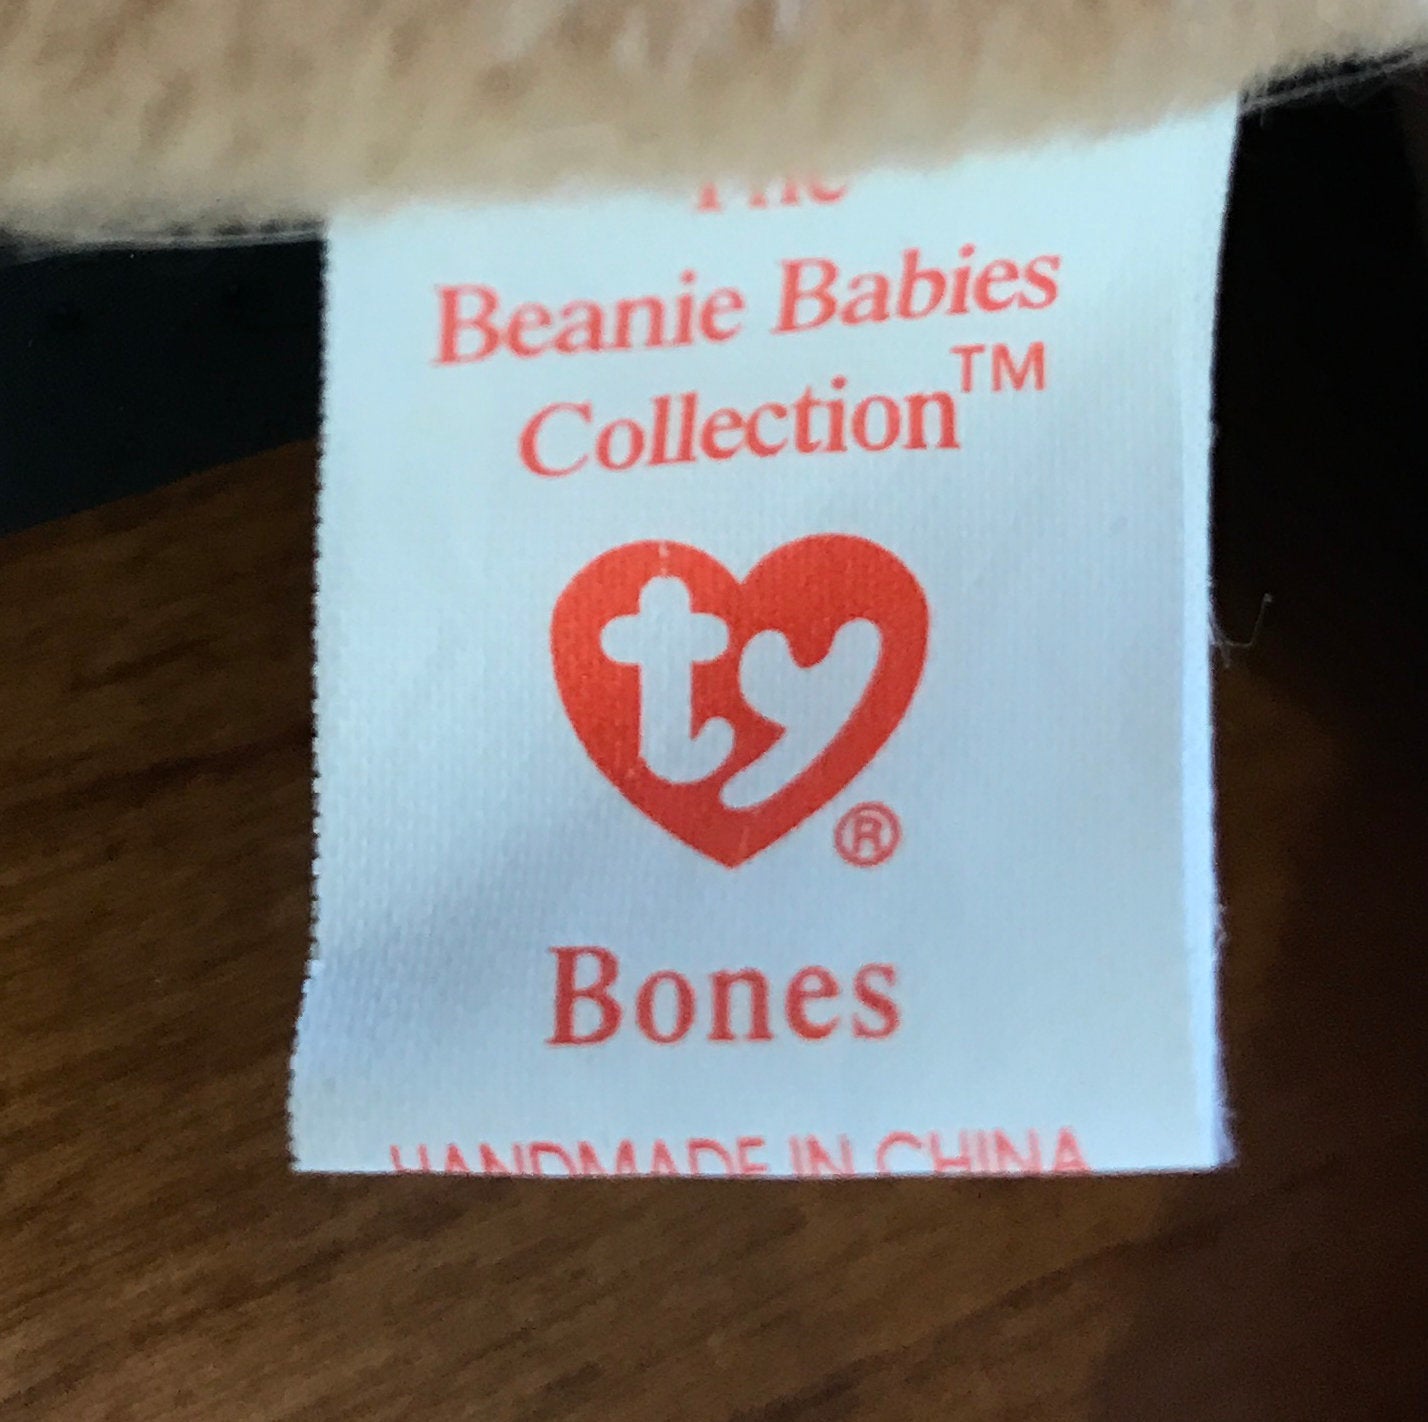 1993 Ty Beanie Babies Collection BONES PVC Tag Errors Plush Stuffed Toy Collectible Vintage - PawPurrPrints.com